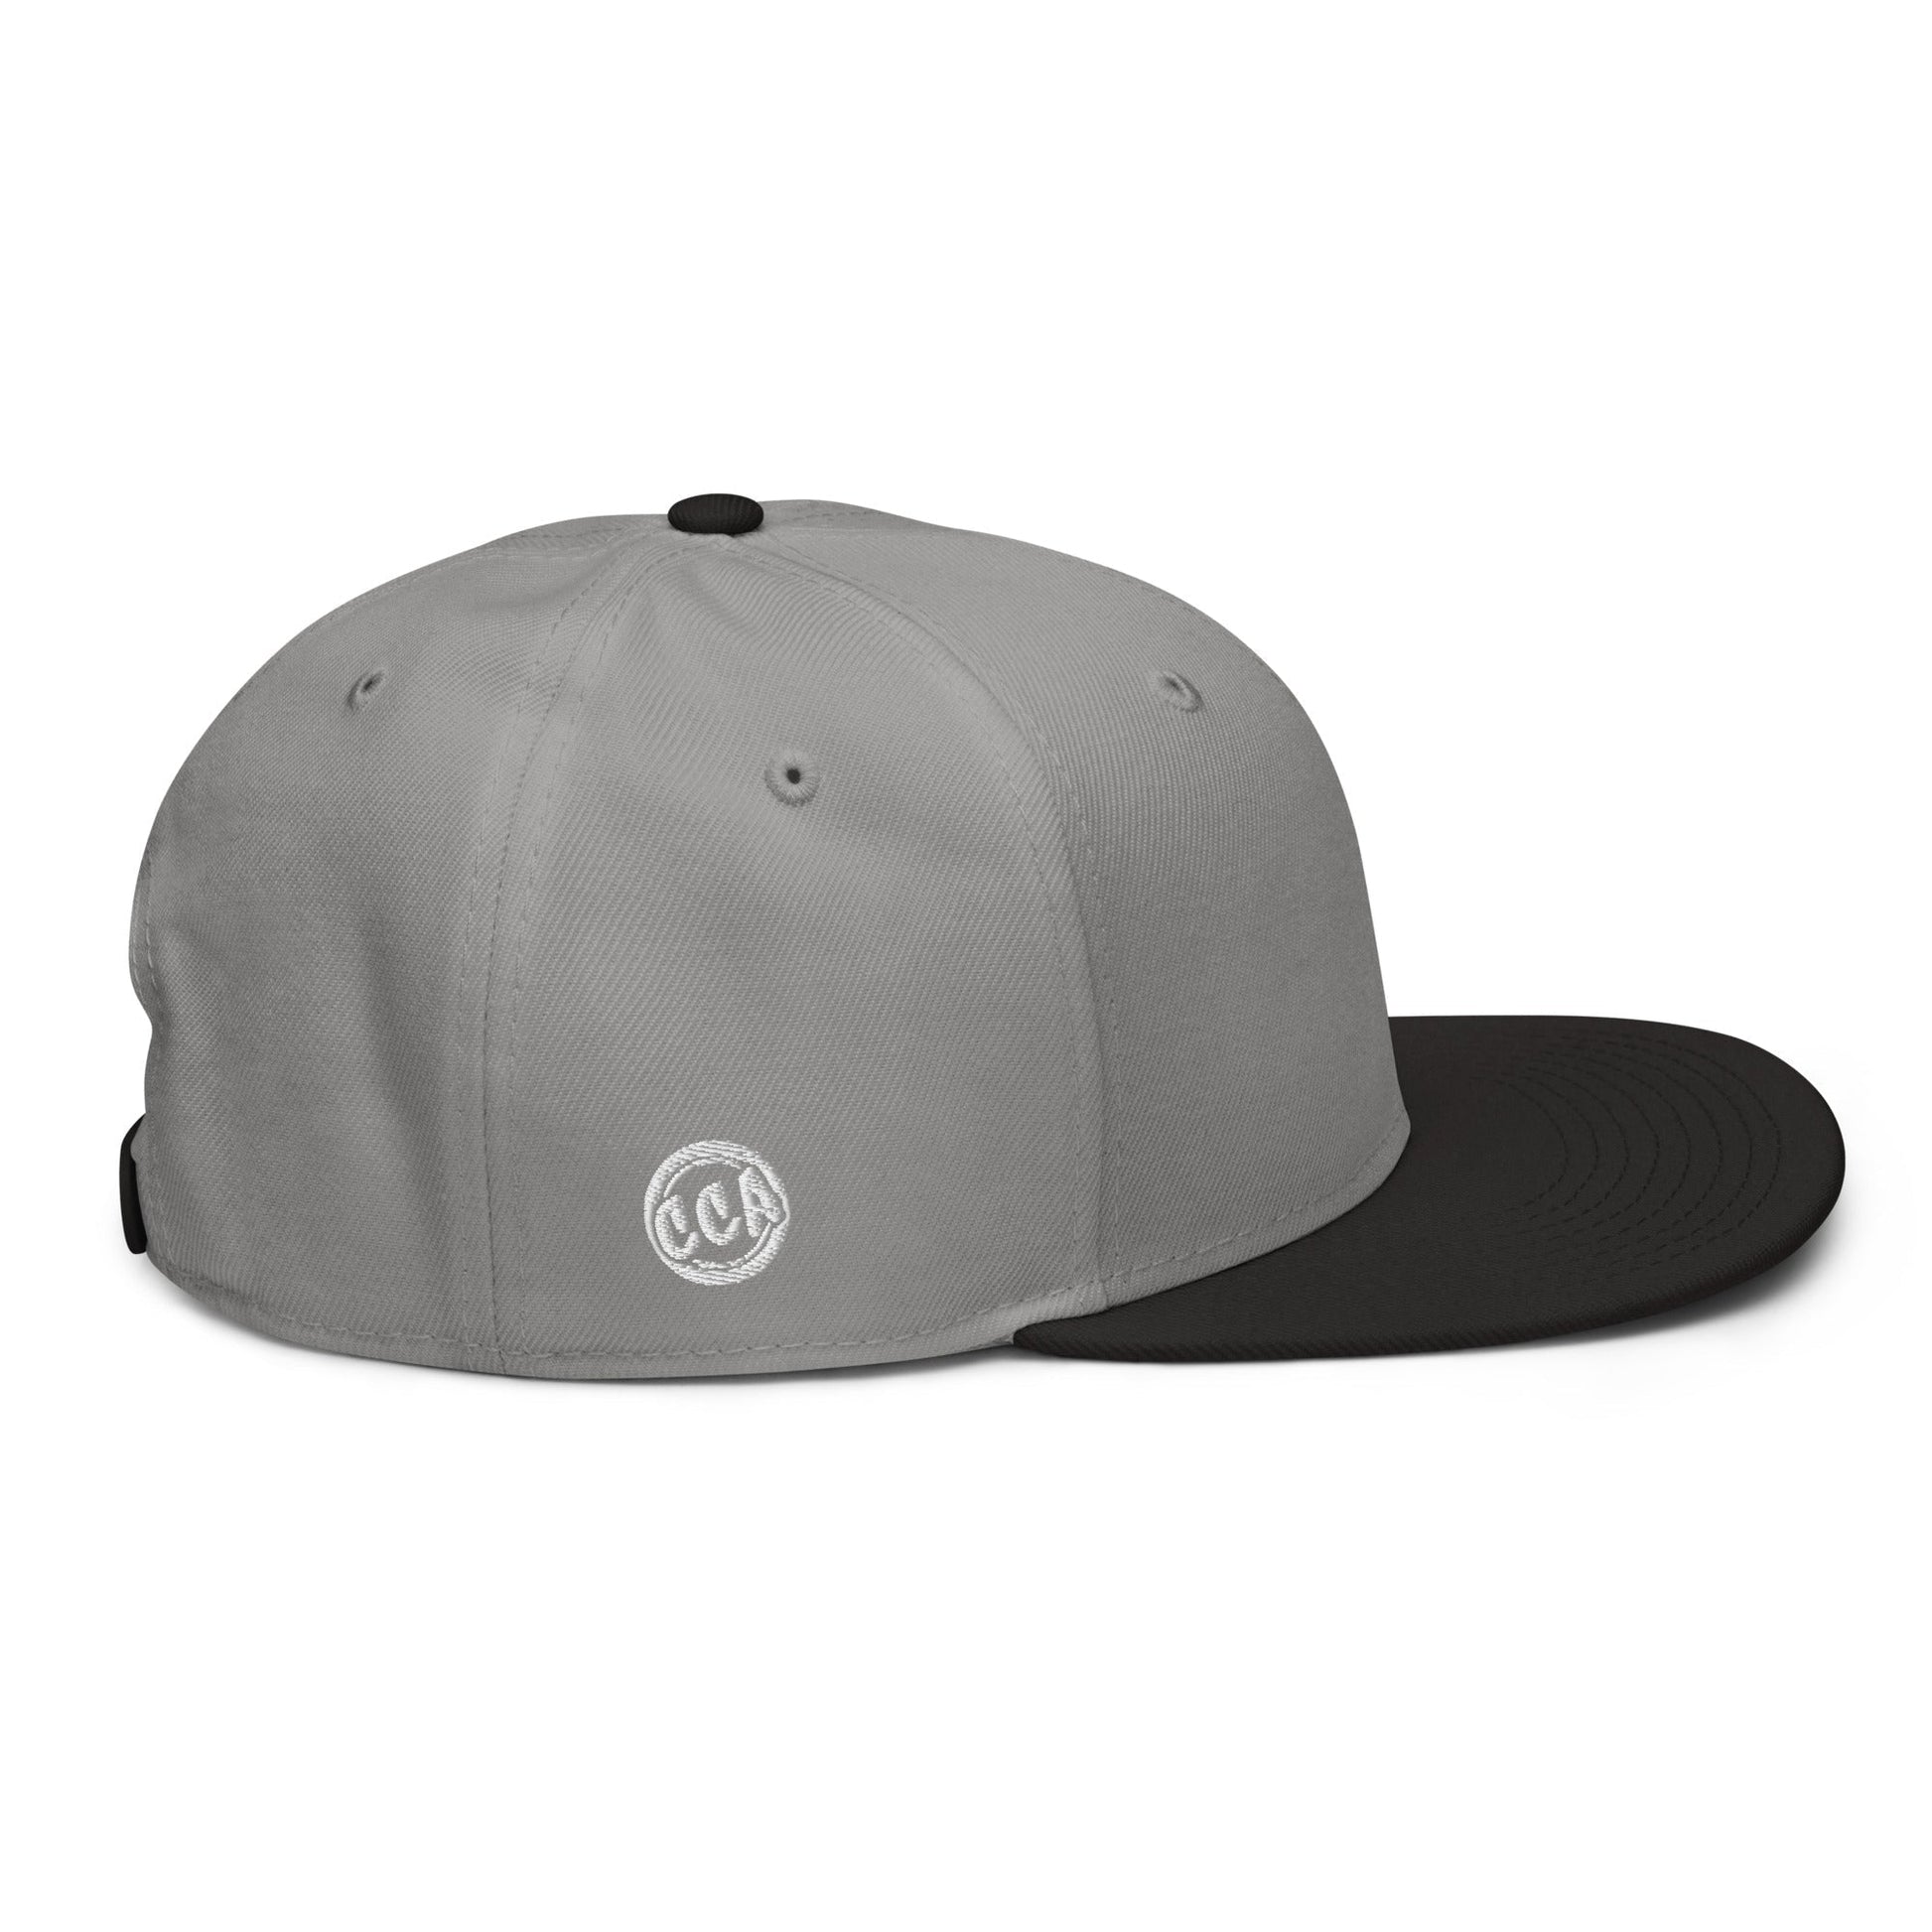 CC Mag White Logo Snapback Hat